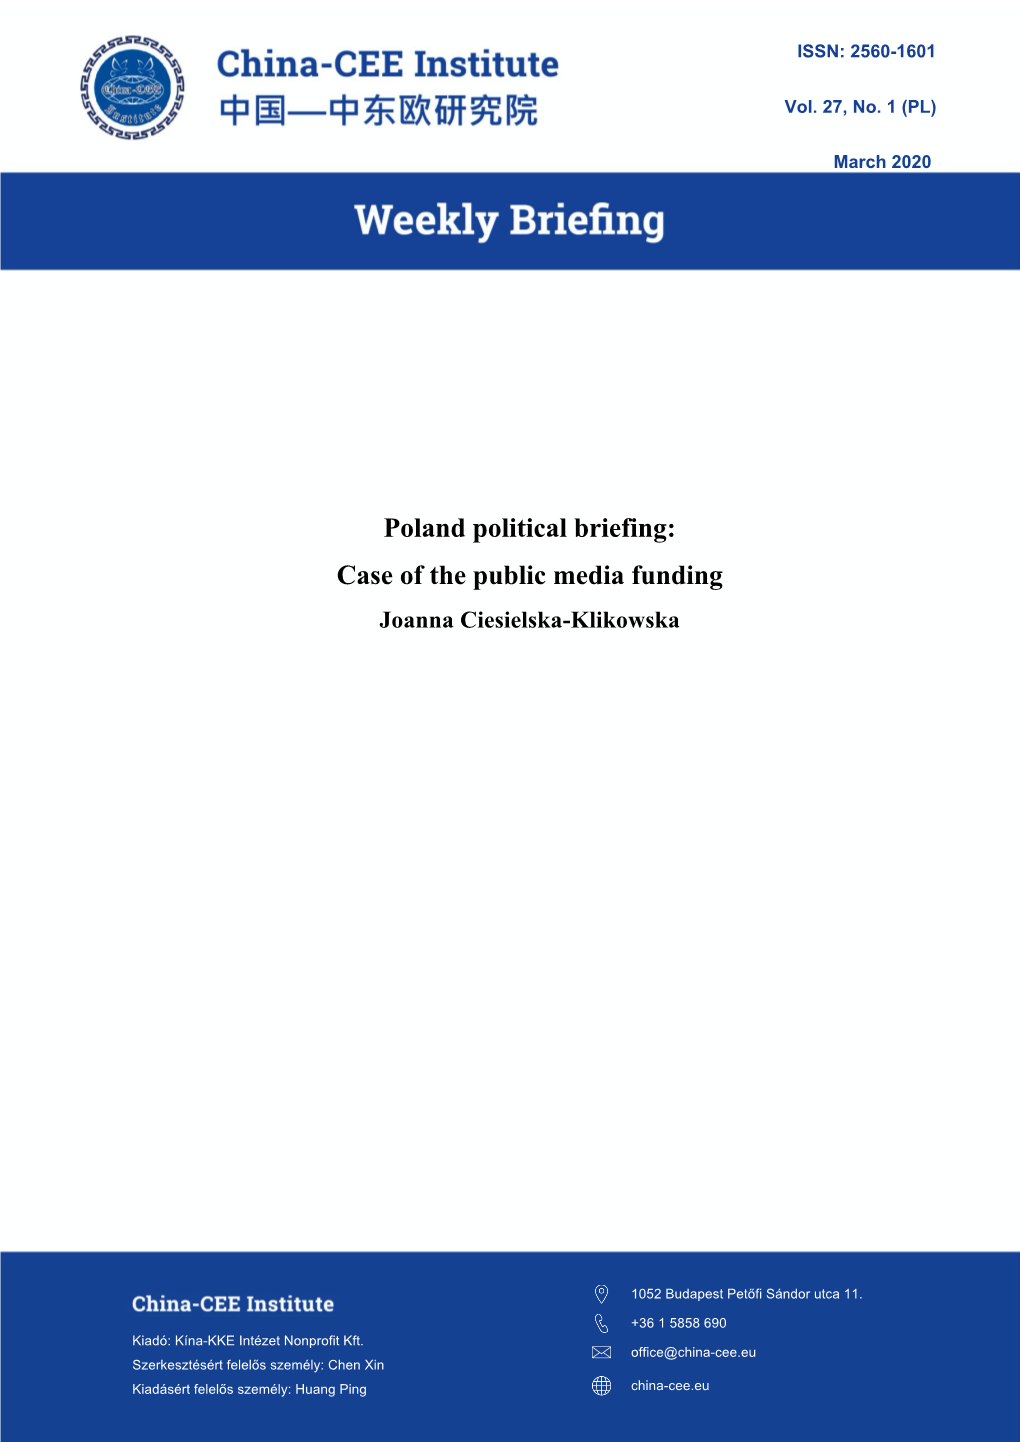 Poland Political Briefing: Case of the Public Media Funding Joanna Ciesielska-Klikowska